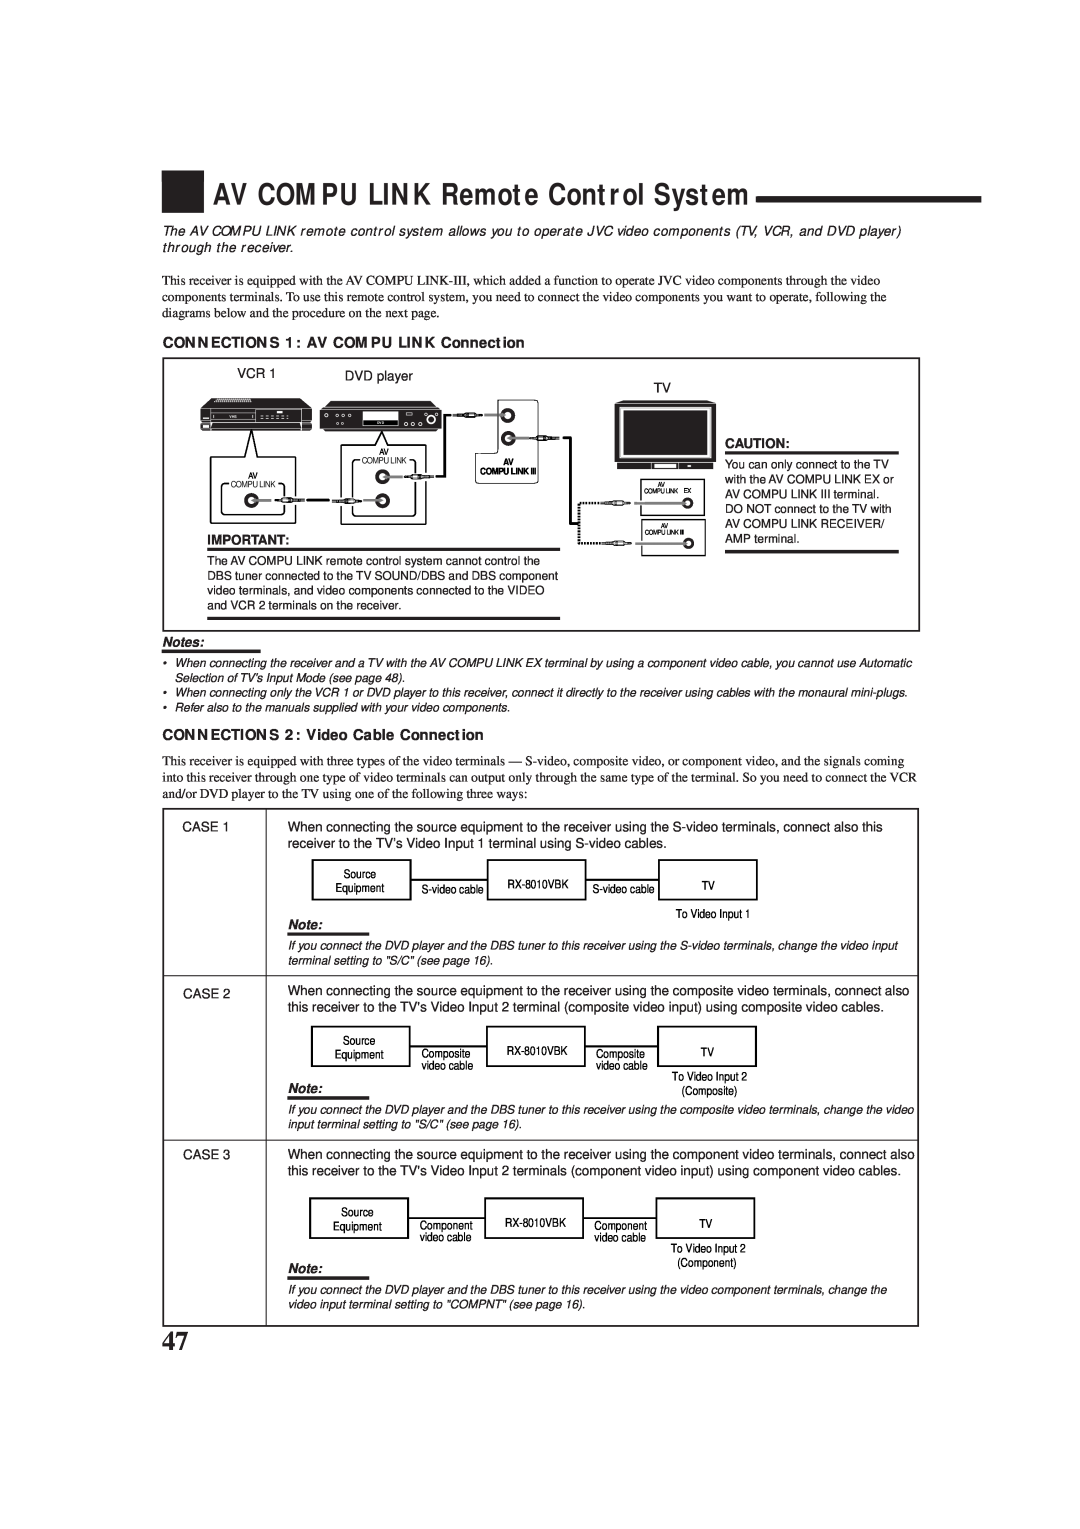 JVC rx-8010vbk manual AV COMPU LINK Remote Control System, CONNECTIONS 1 AV COMPU LINK Connection 